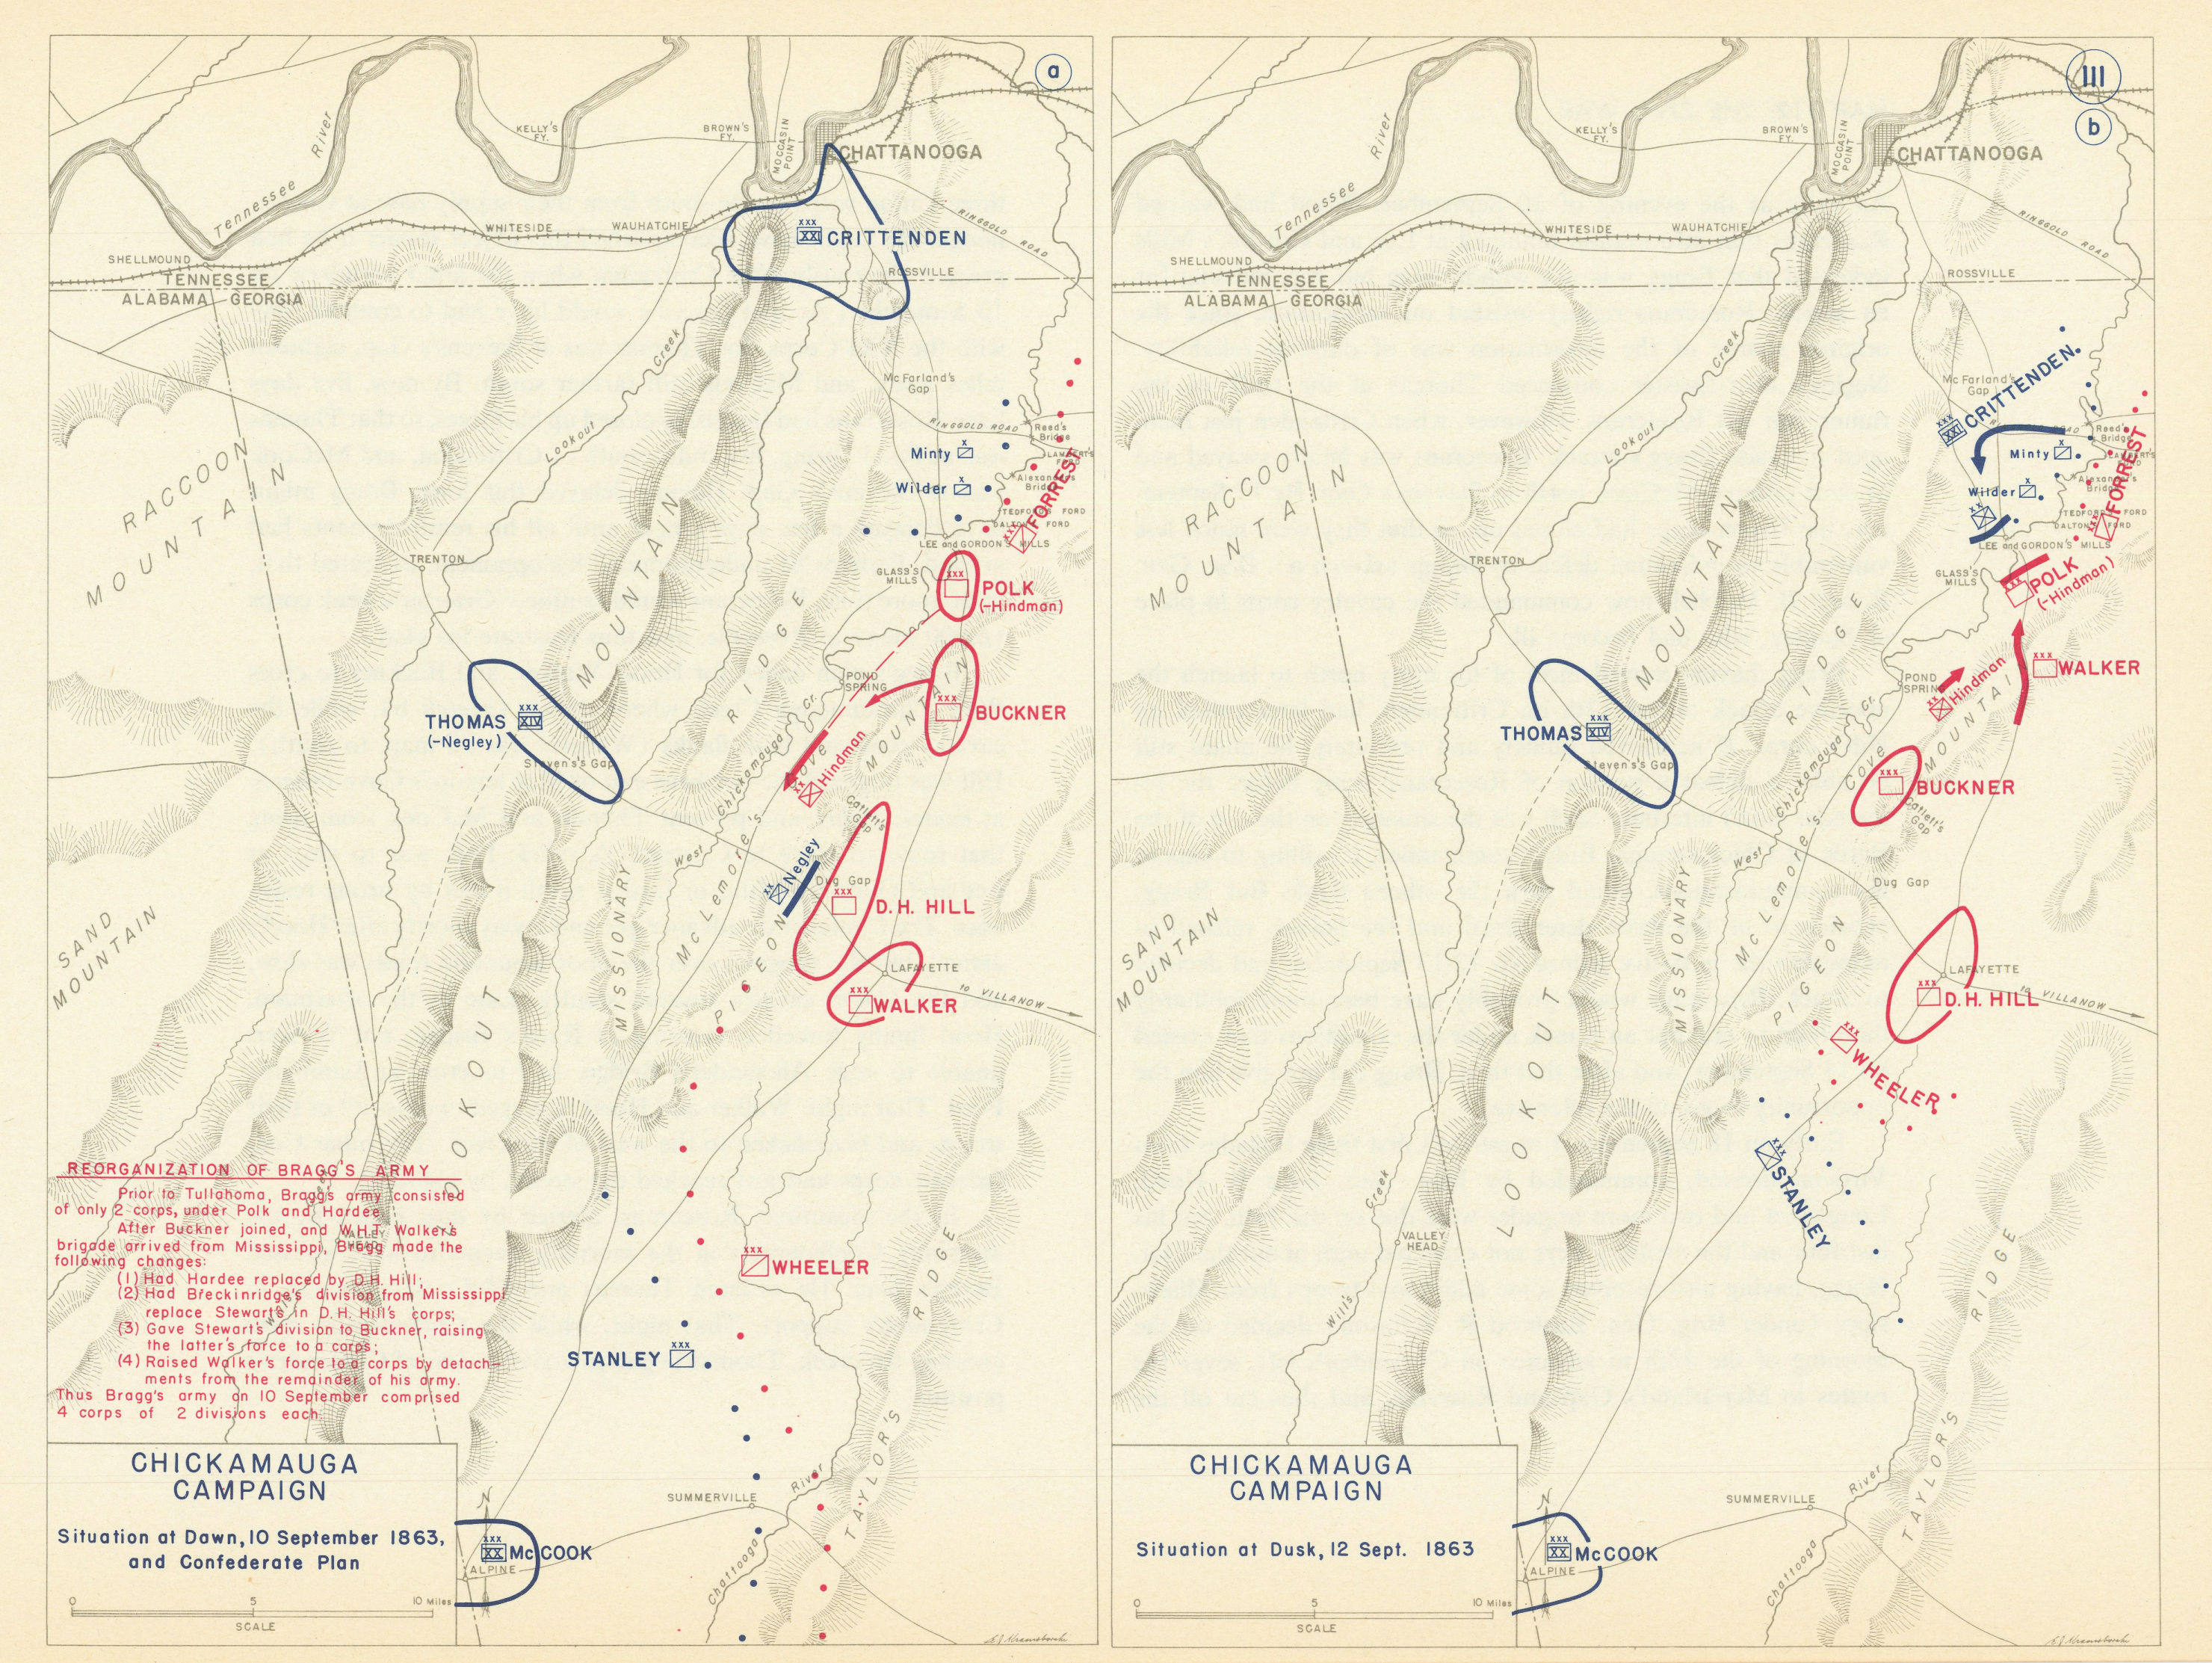 American Civil War. 10-12 September 1863 Chickamauga Campaign 1959 old map